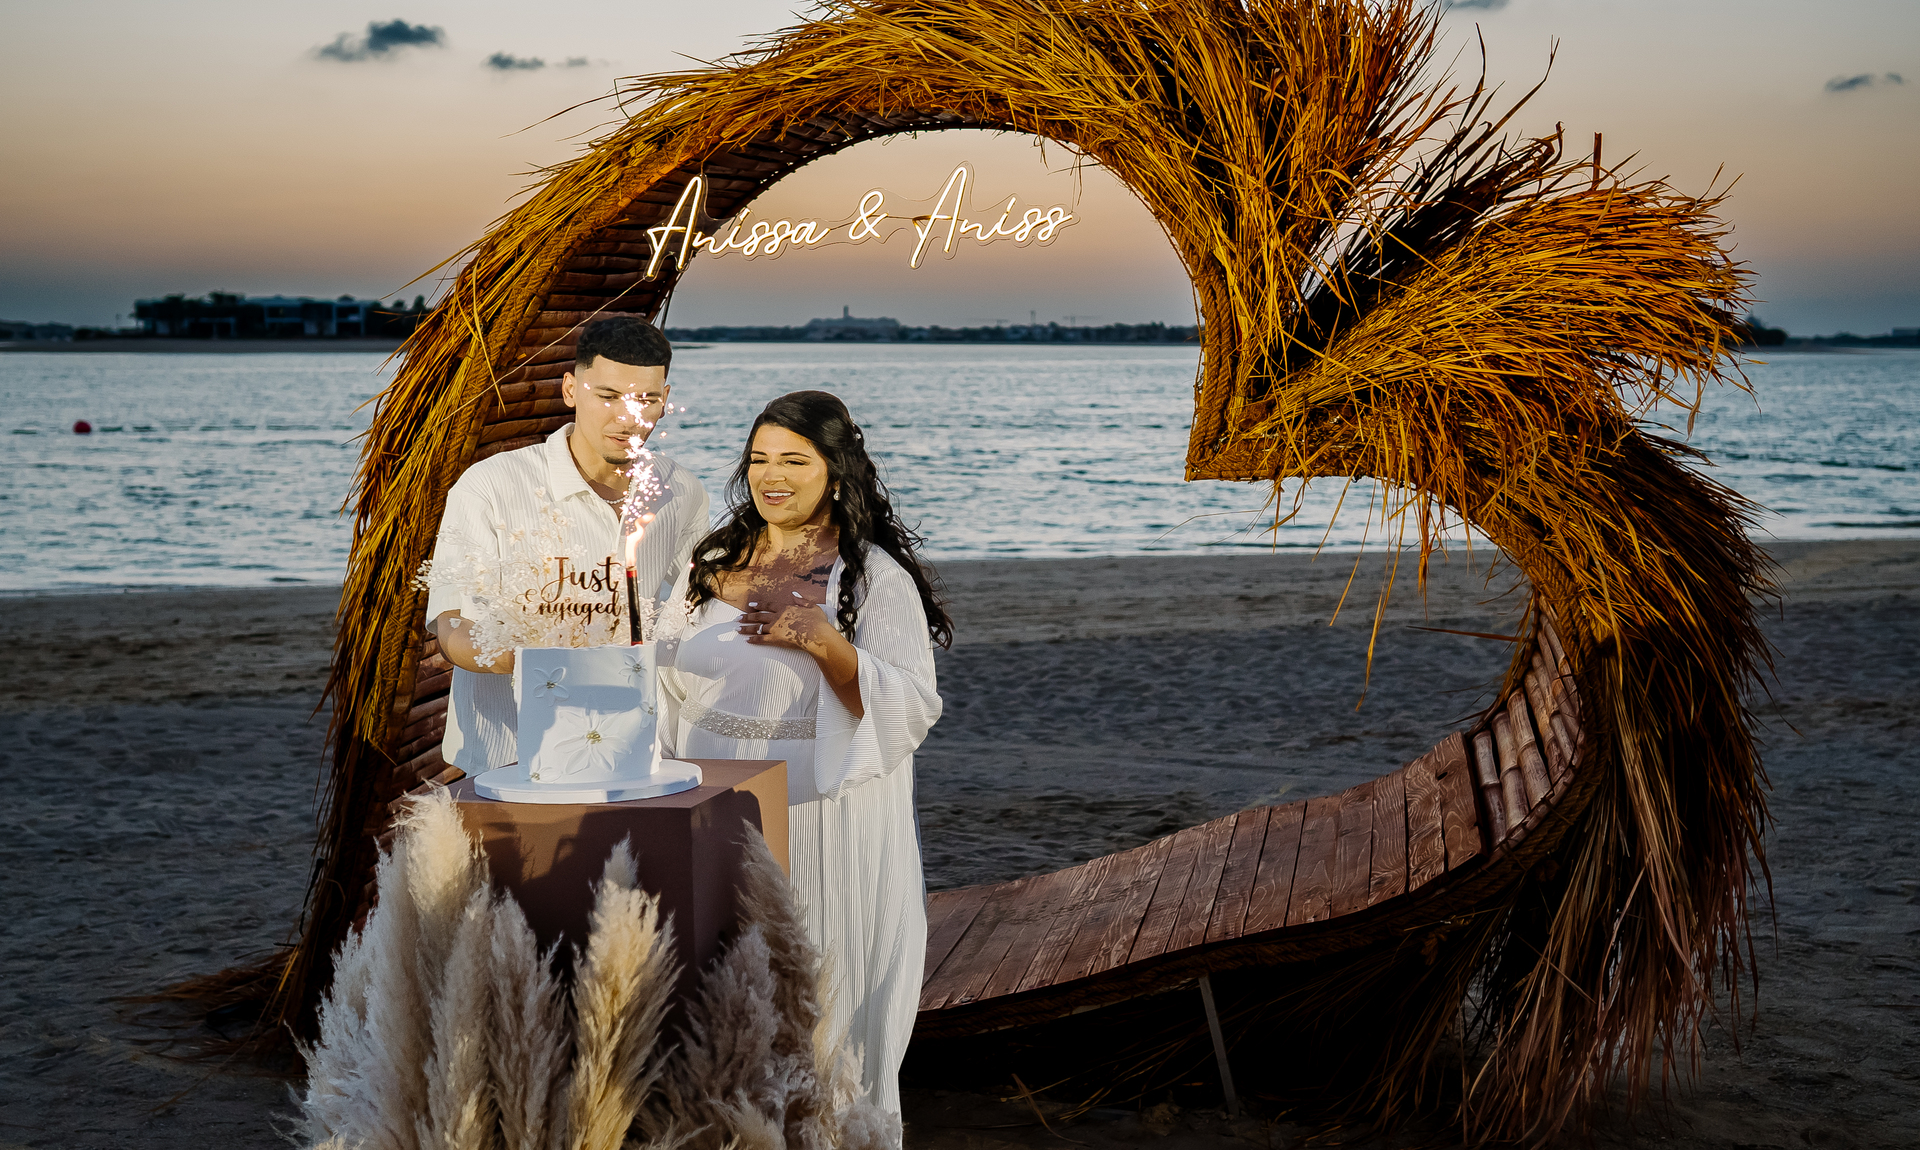 Anissa & Aniss’s Beach Engagement Cover